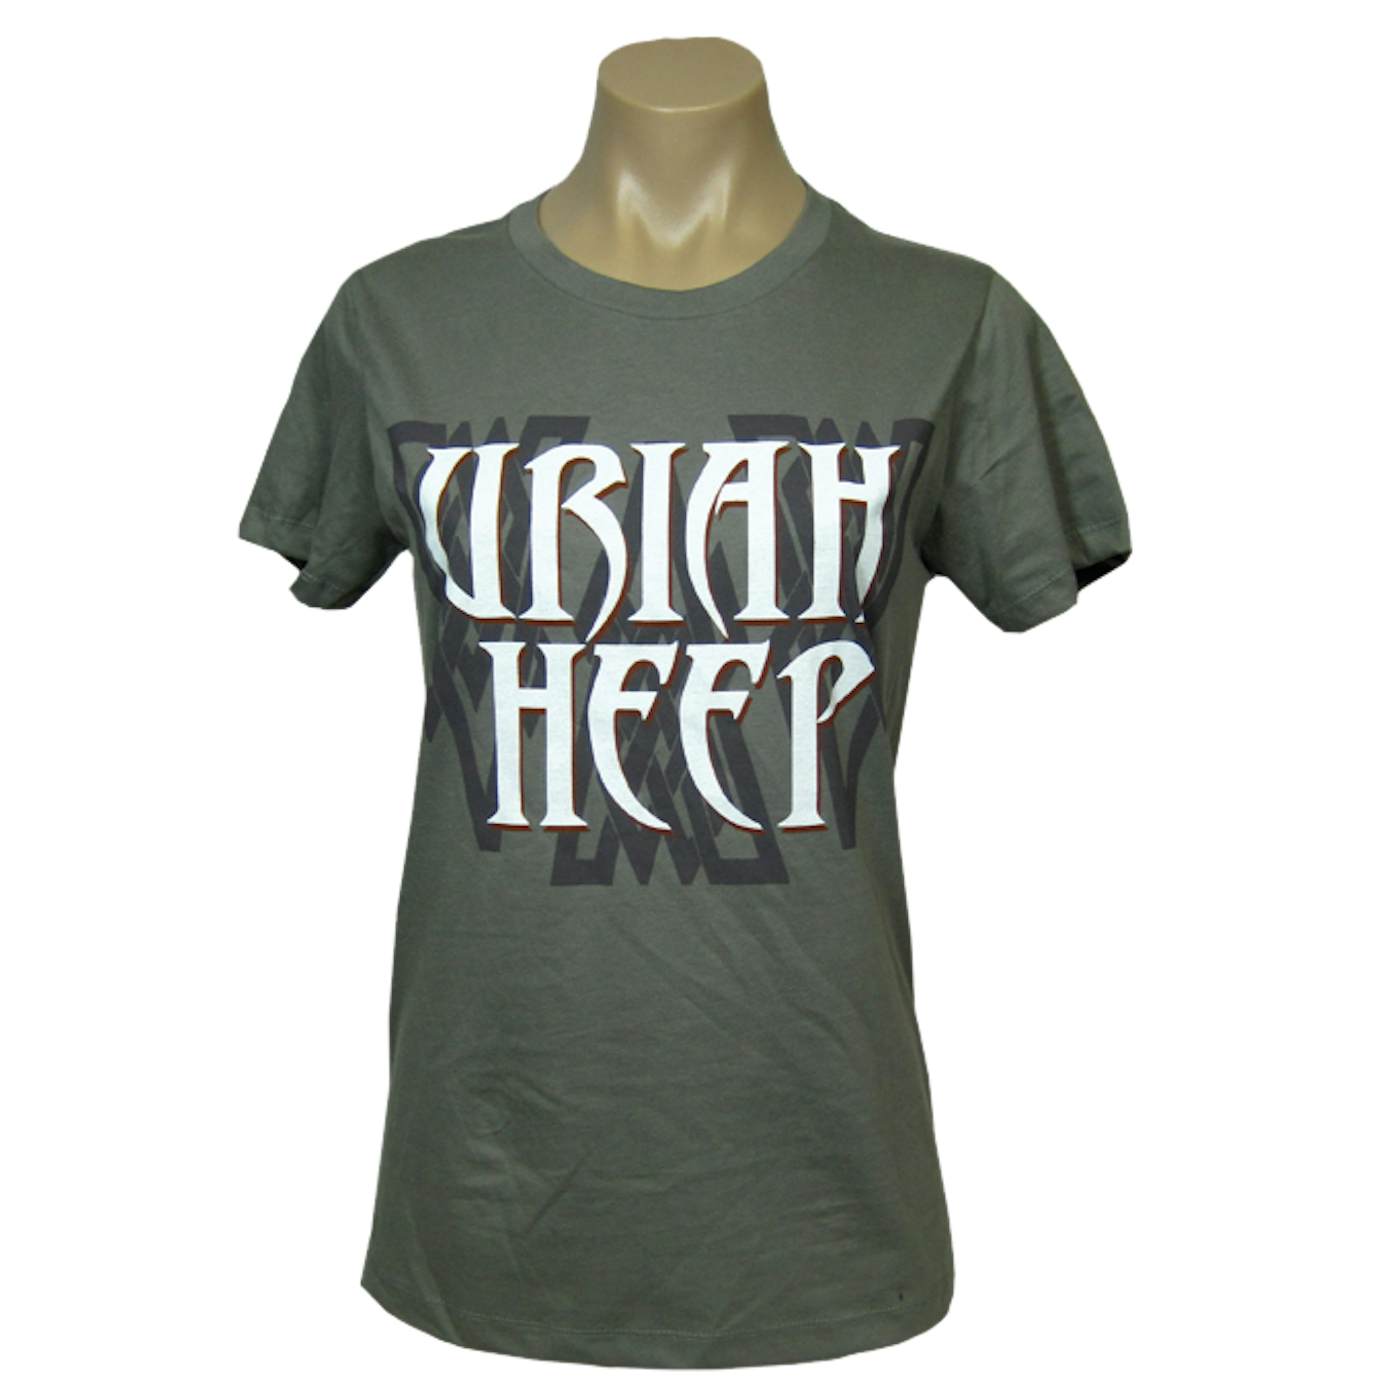 Uriah Heep "Logo" Women's T-Shirt